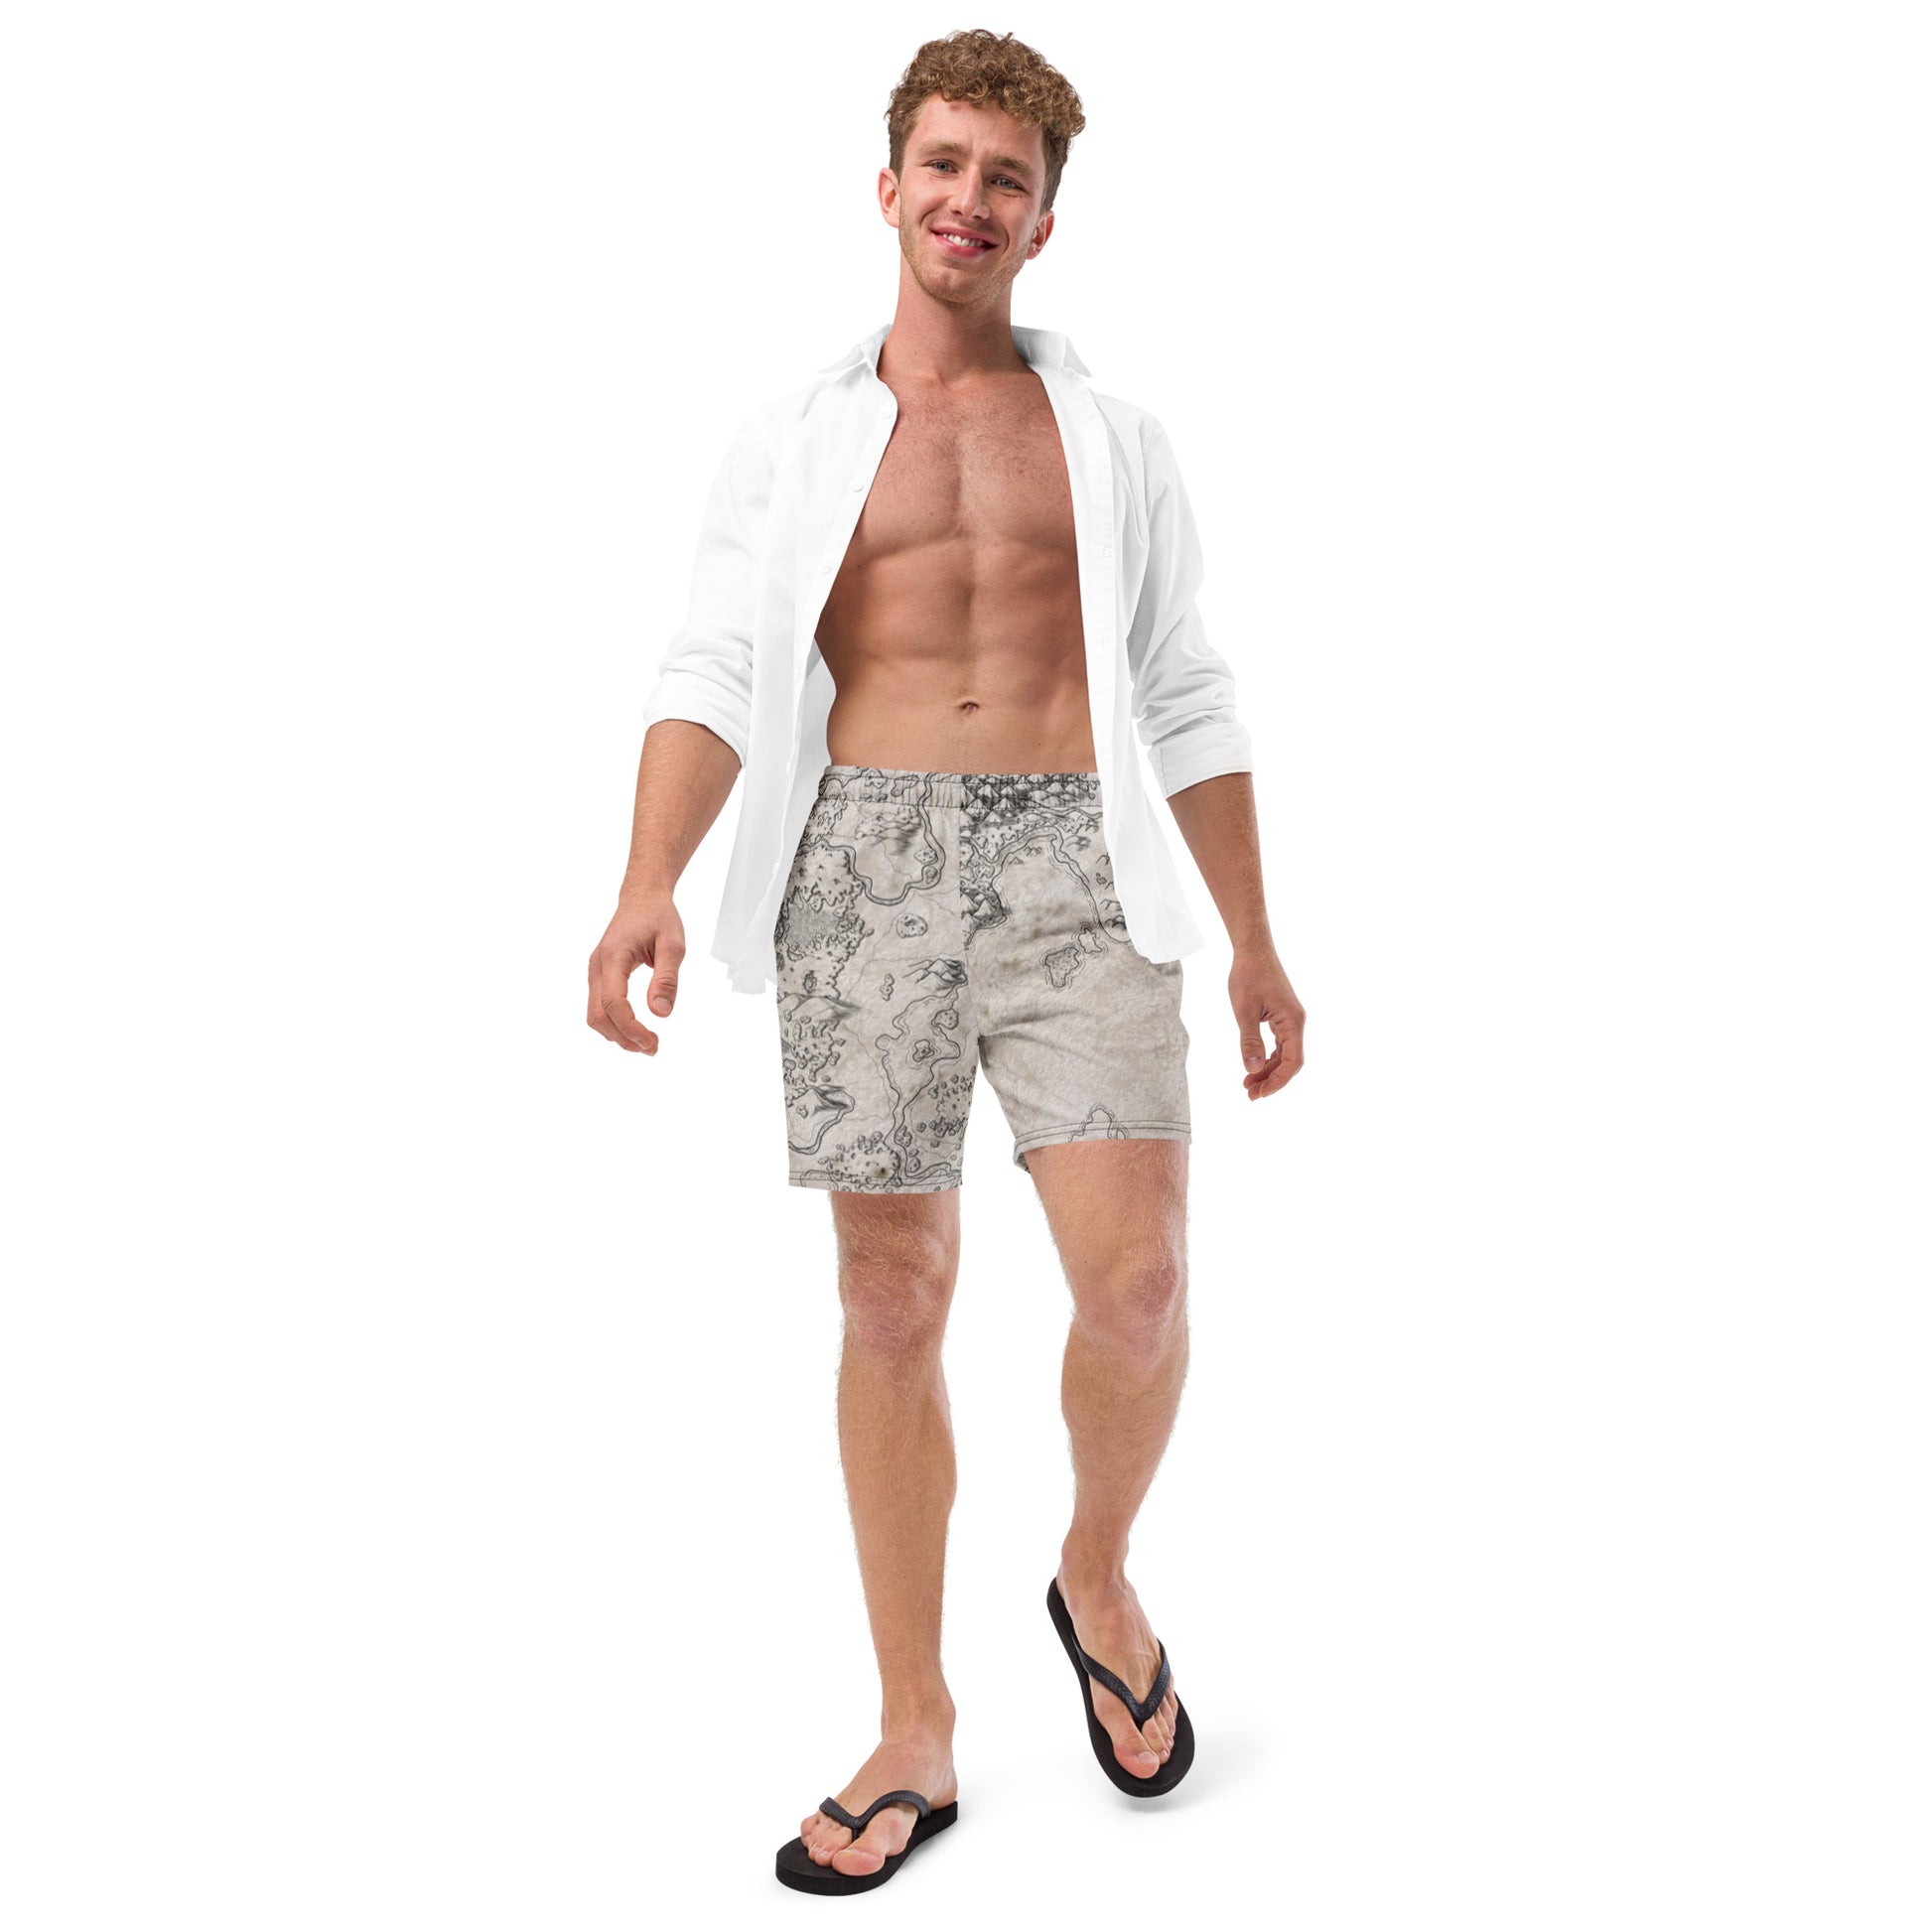 A model wears the Wallerfen swim trunks by Deven Rue with an open button up shirt and flip flops.